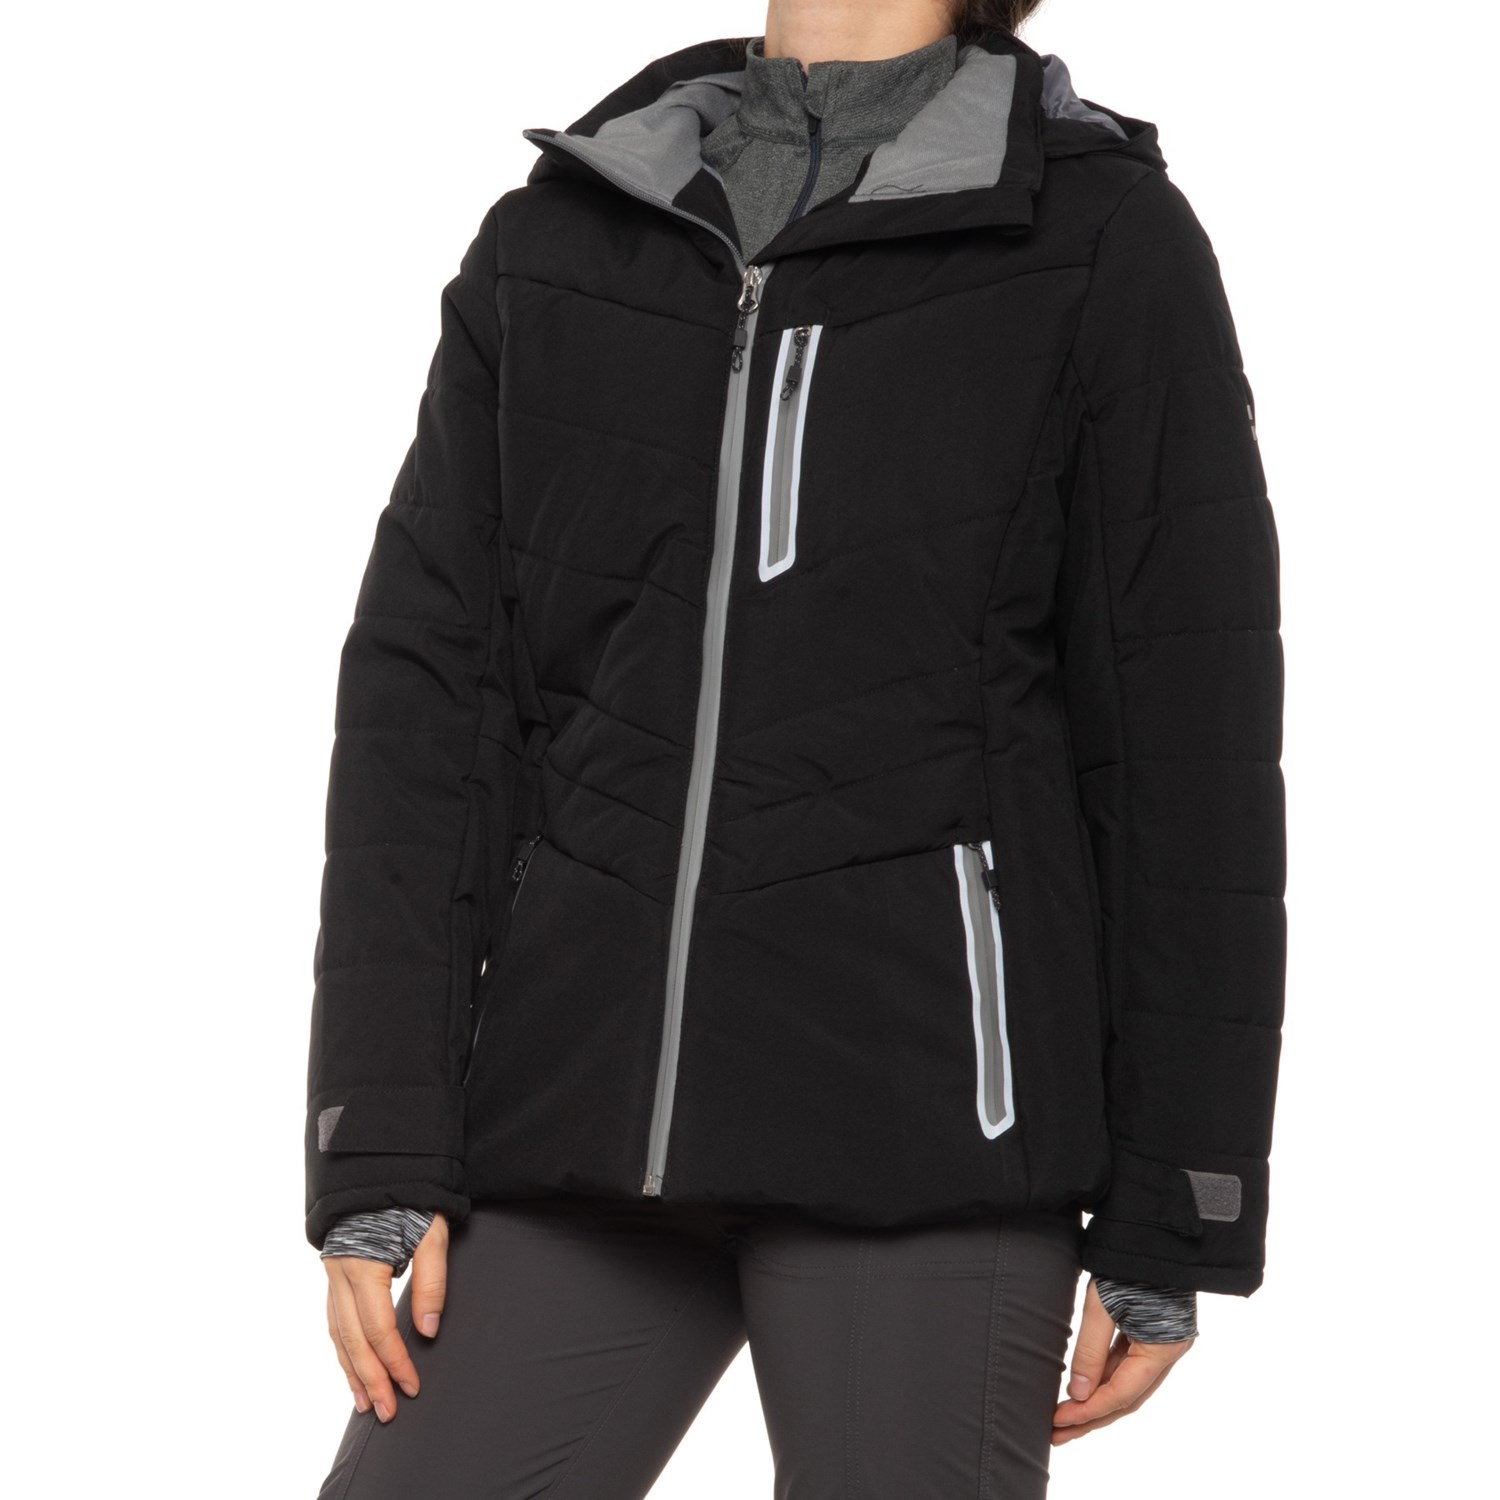 Swiss Alps Womens Insulated Waterproof Performance Winter Ski Jacket Coat 